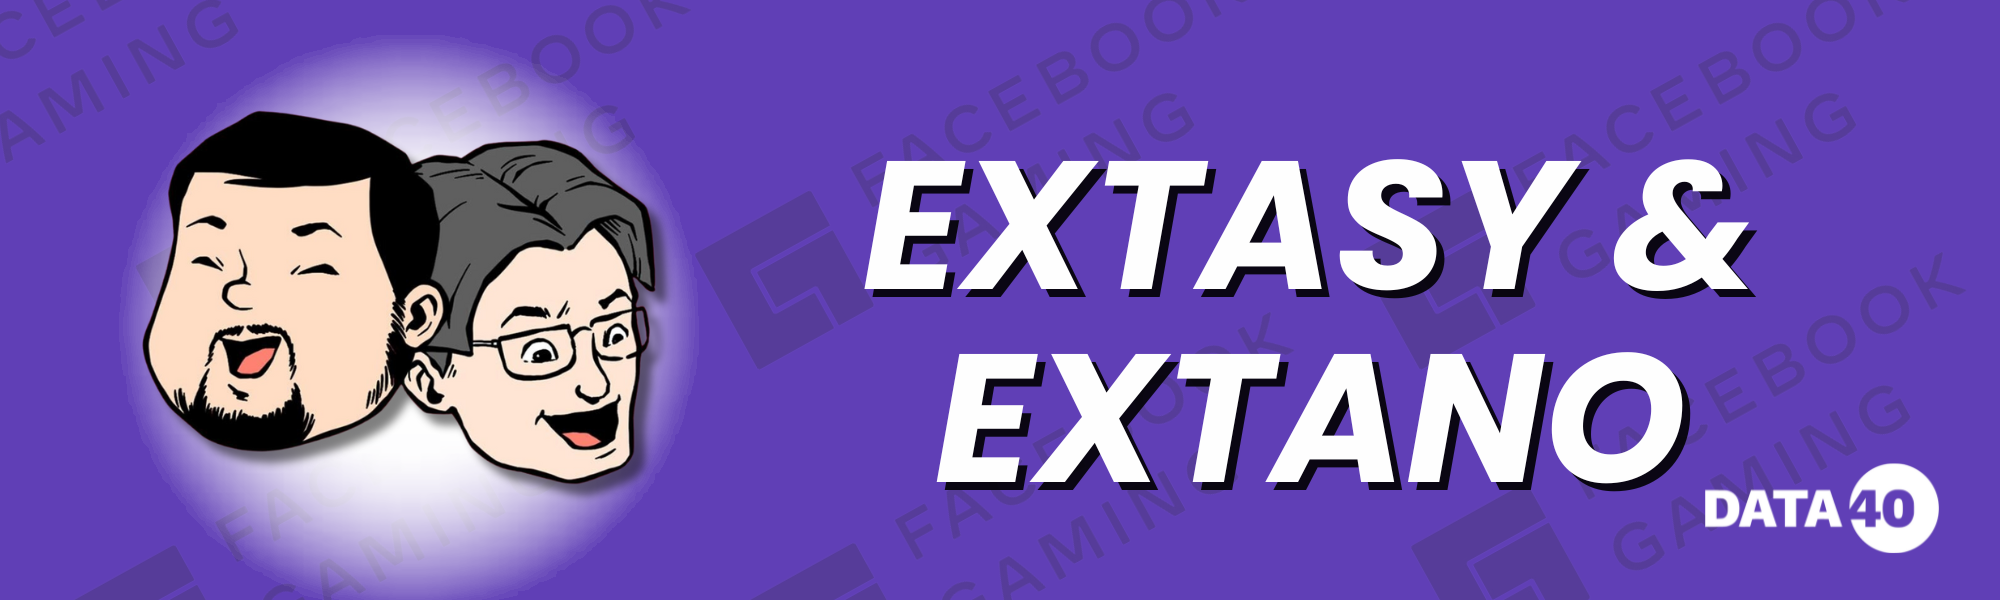 Extasy & Extano